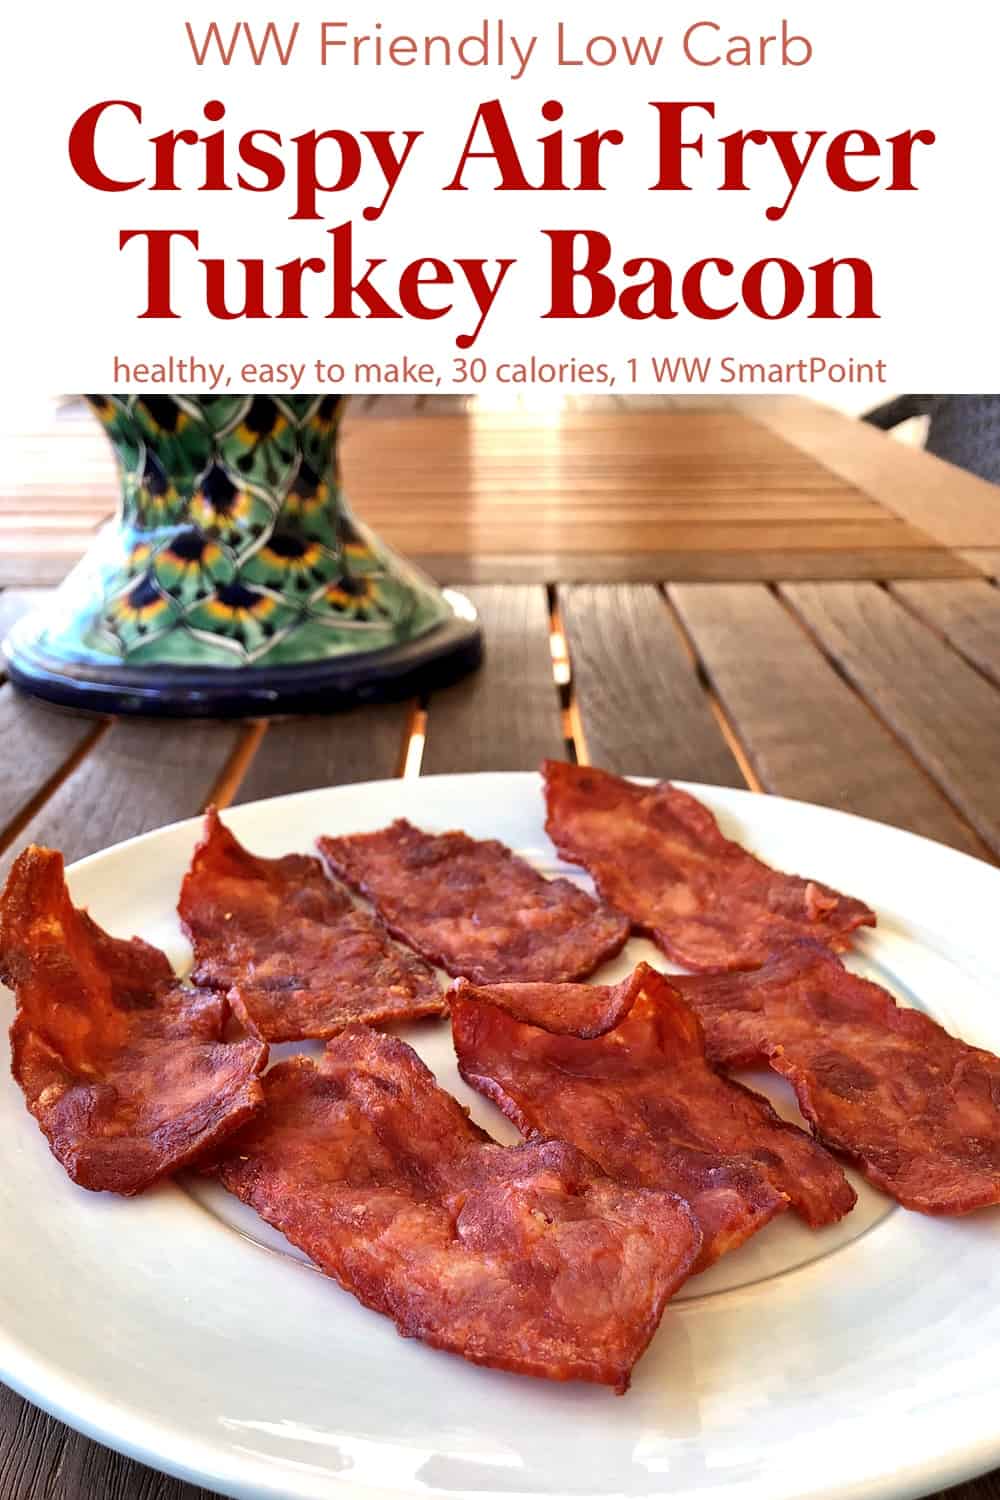 Crispy air fryer turkey bacon on a plate on wooden table.